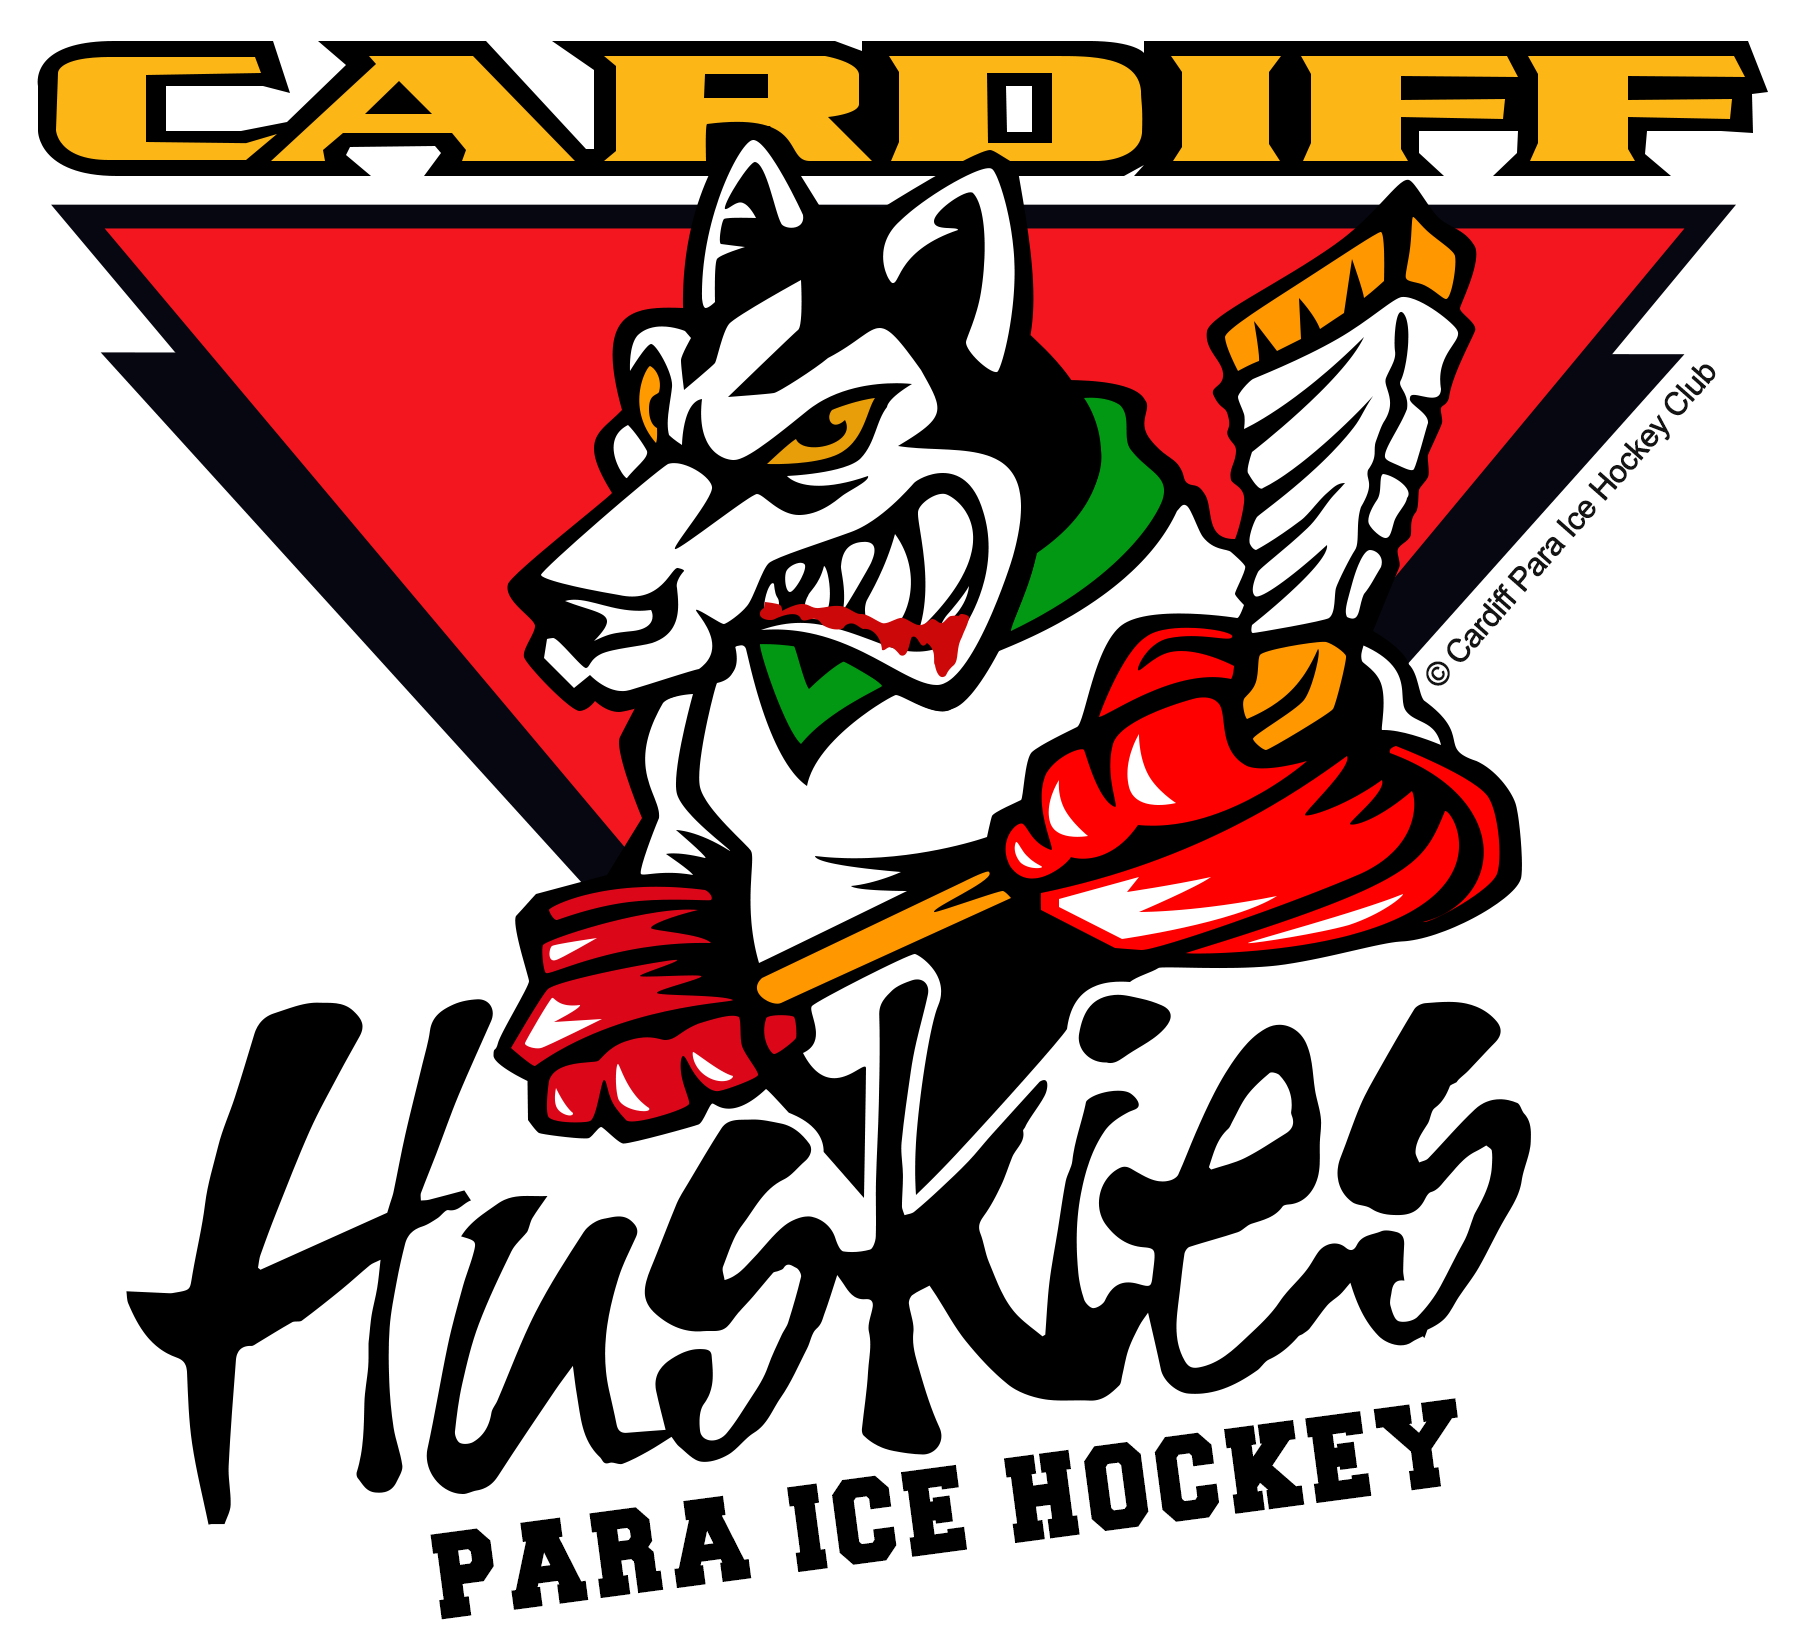 Cardiff Huskies Para Ice Hockey Club Logo